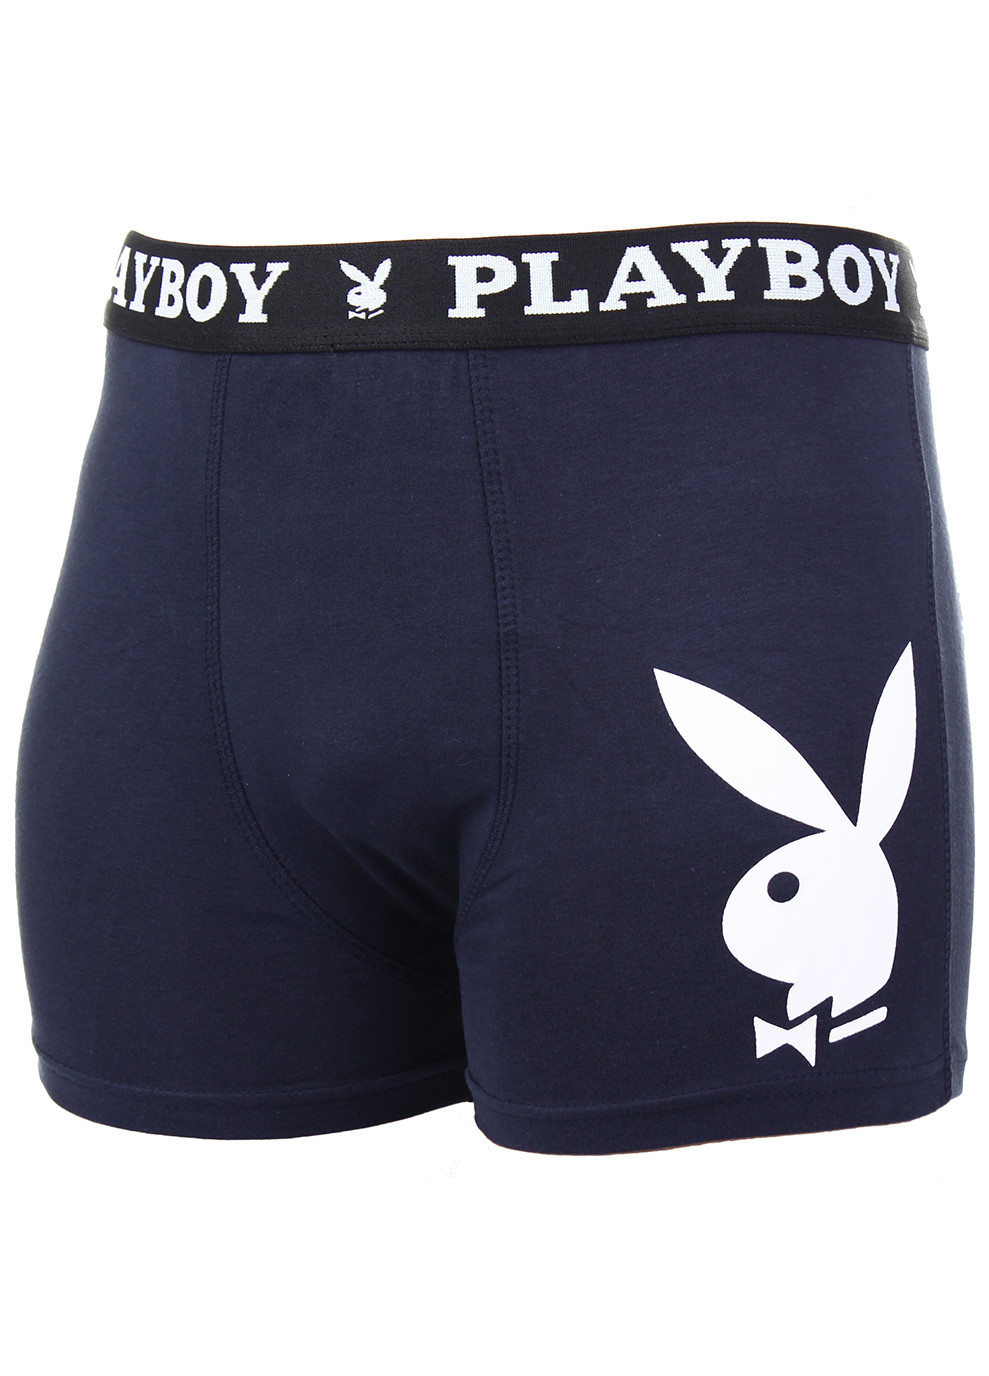 Men's Underwear Classic 1-pack S blue Playboy трусы-боксеры (258402659)